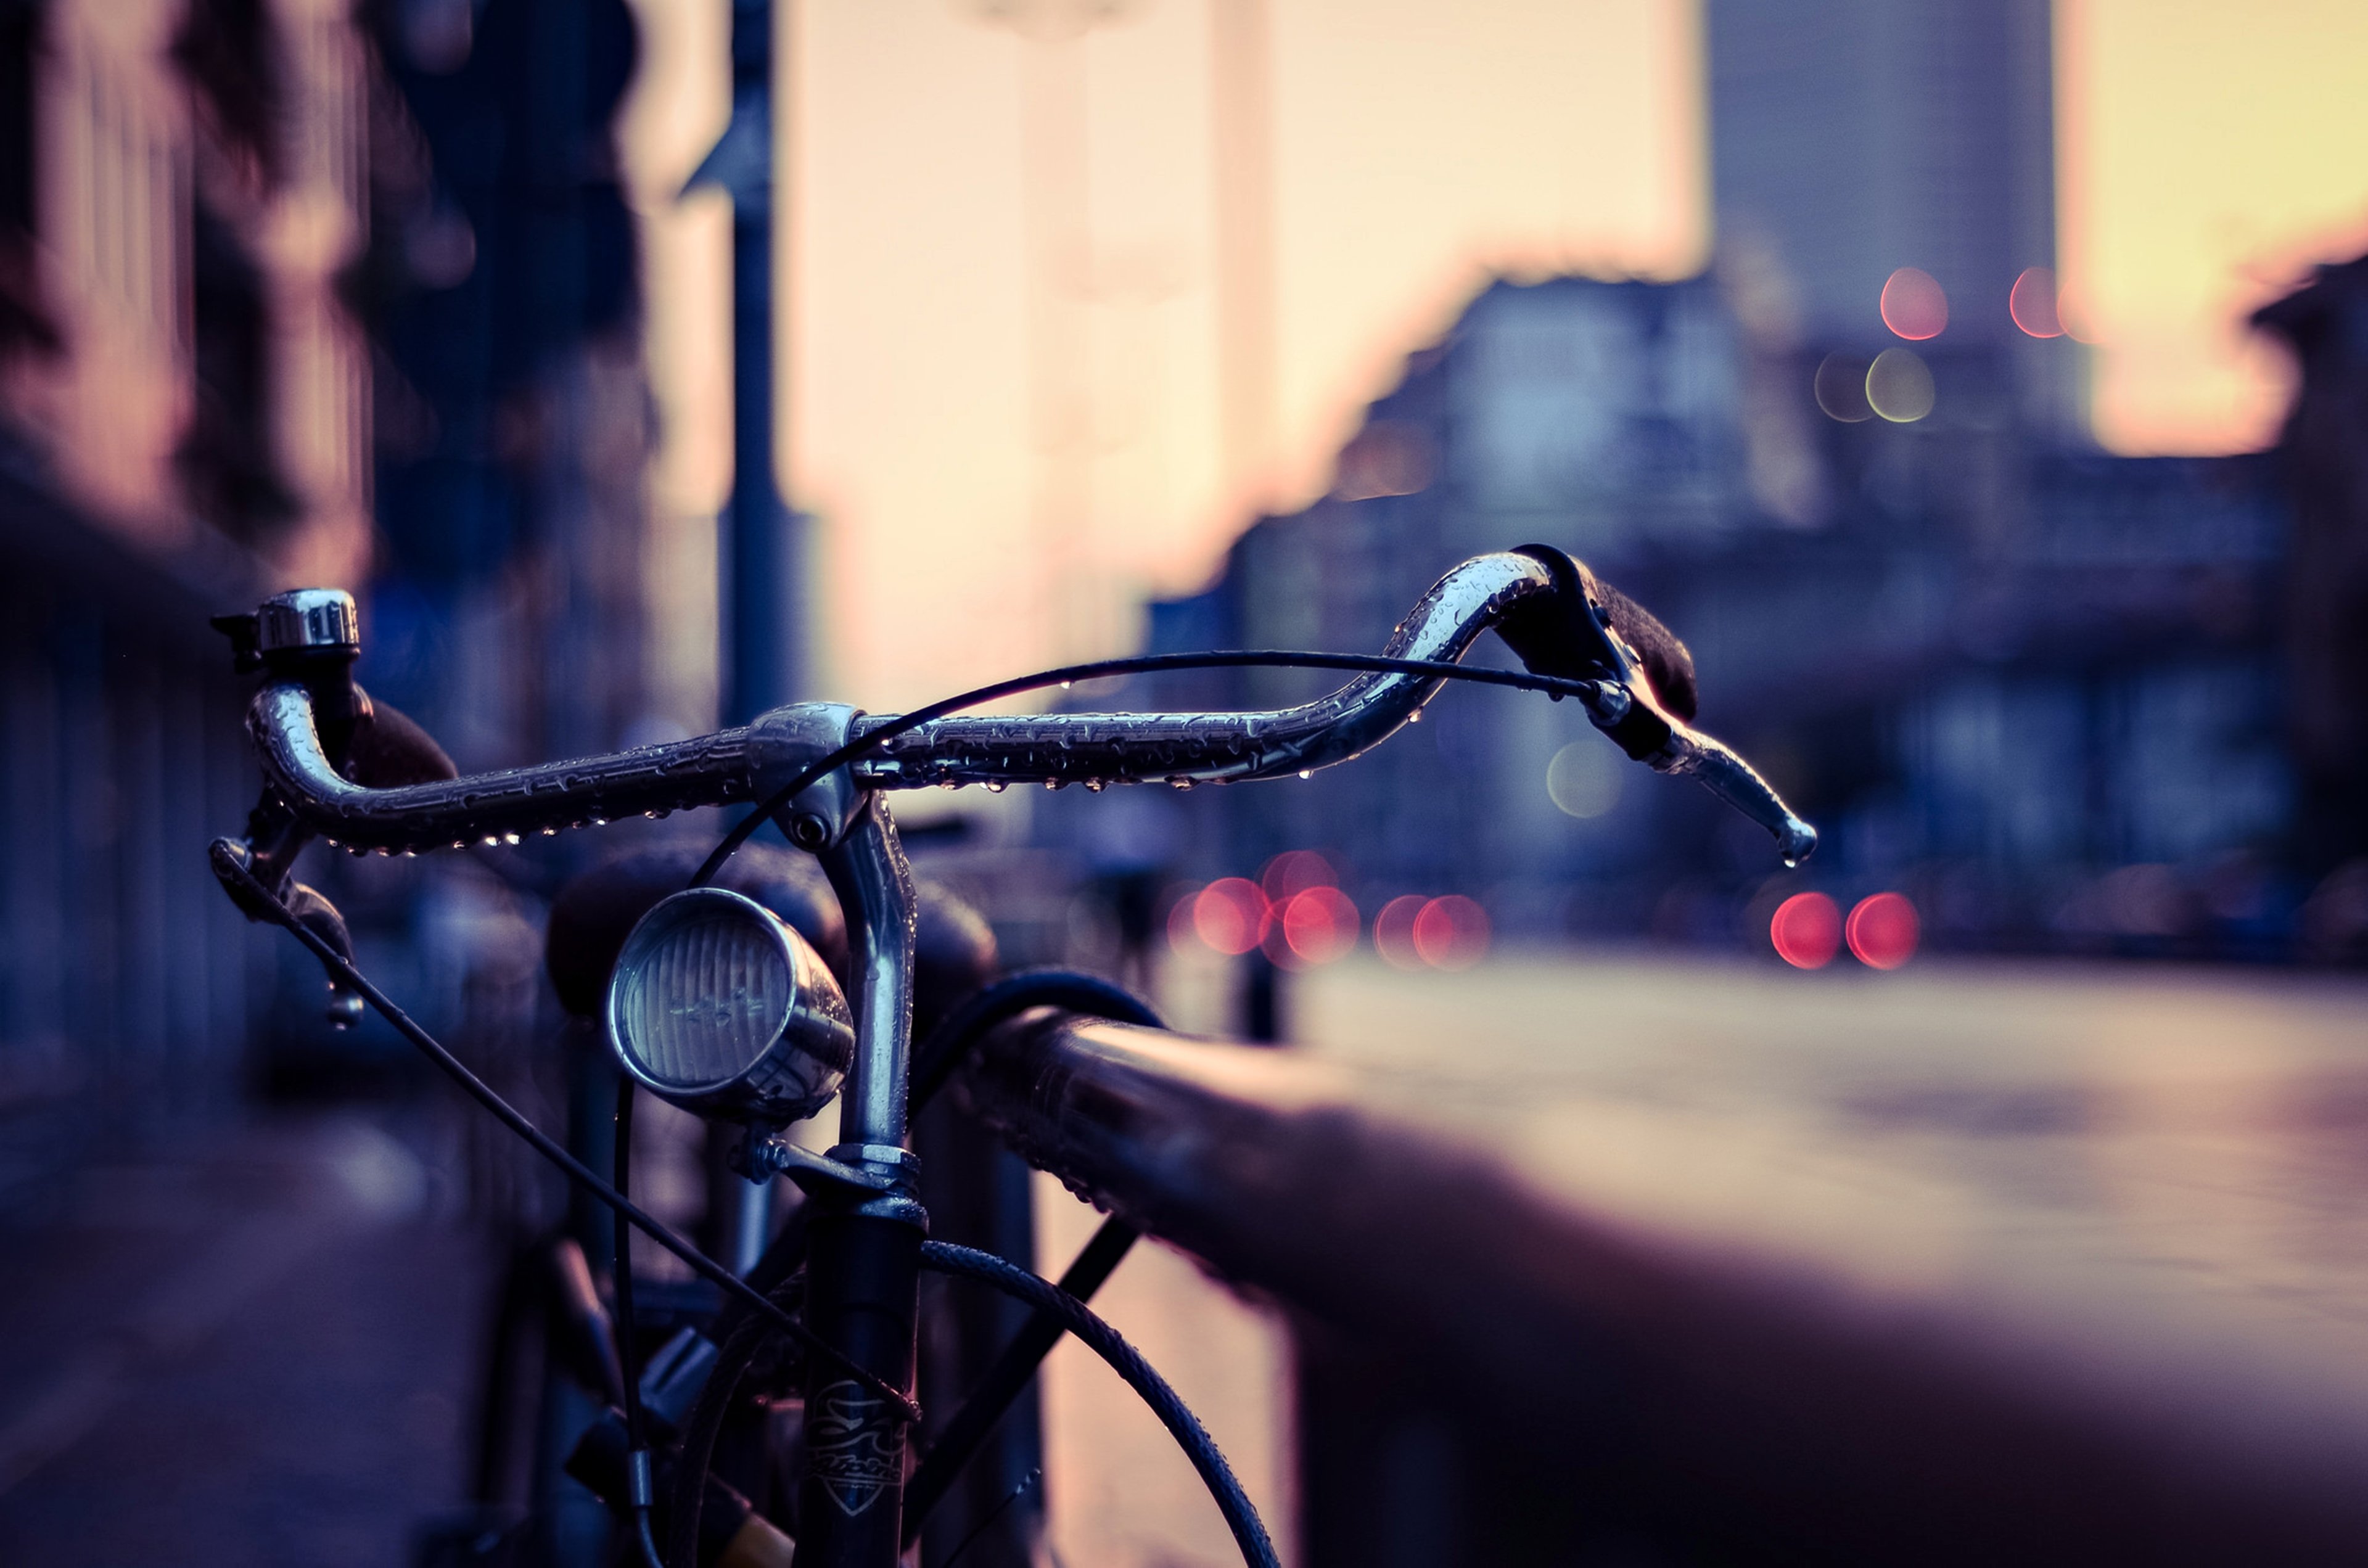 bike, Drops, Evening, Lights, Railings, City, Emotions, Classic Wallpaper